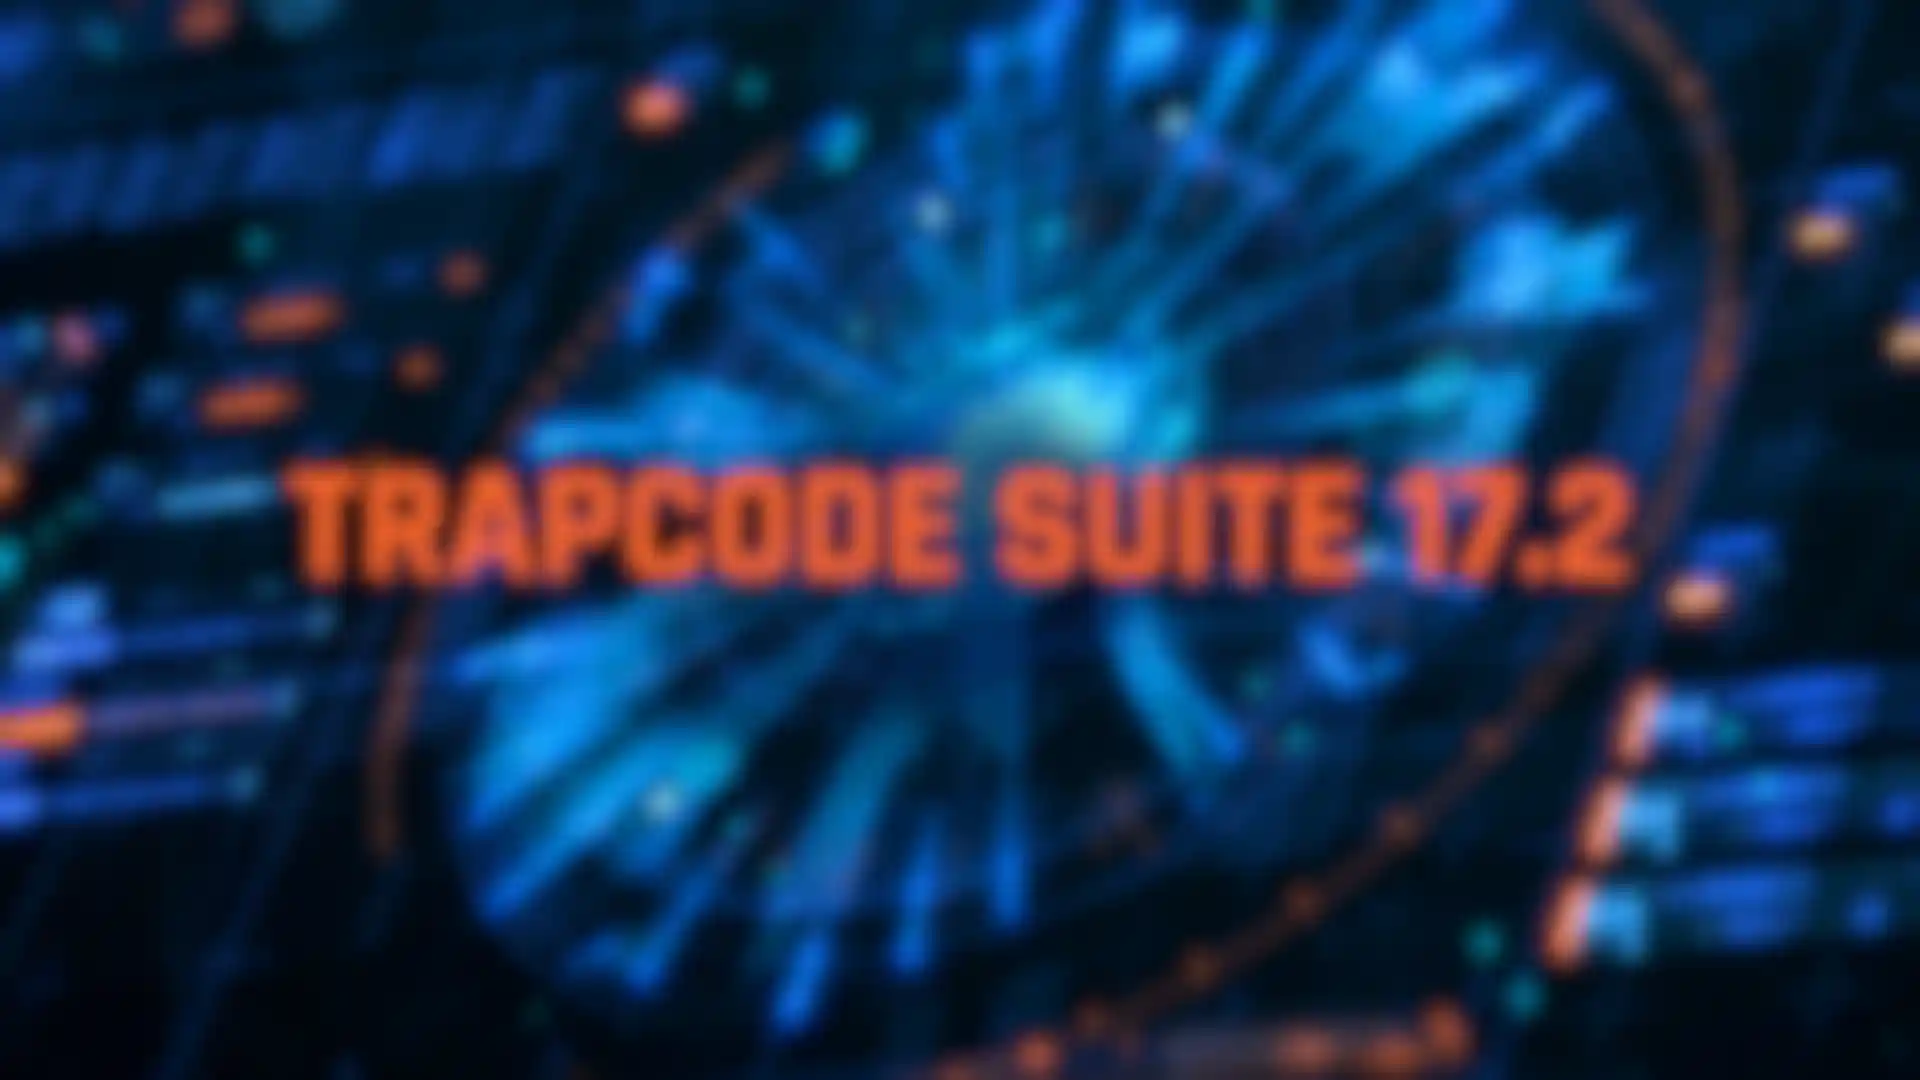 Trapcode Suite 17.2 Ora Disponibile image